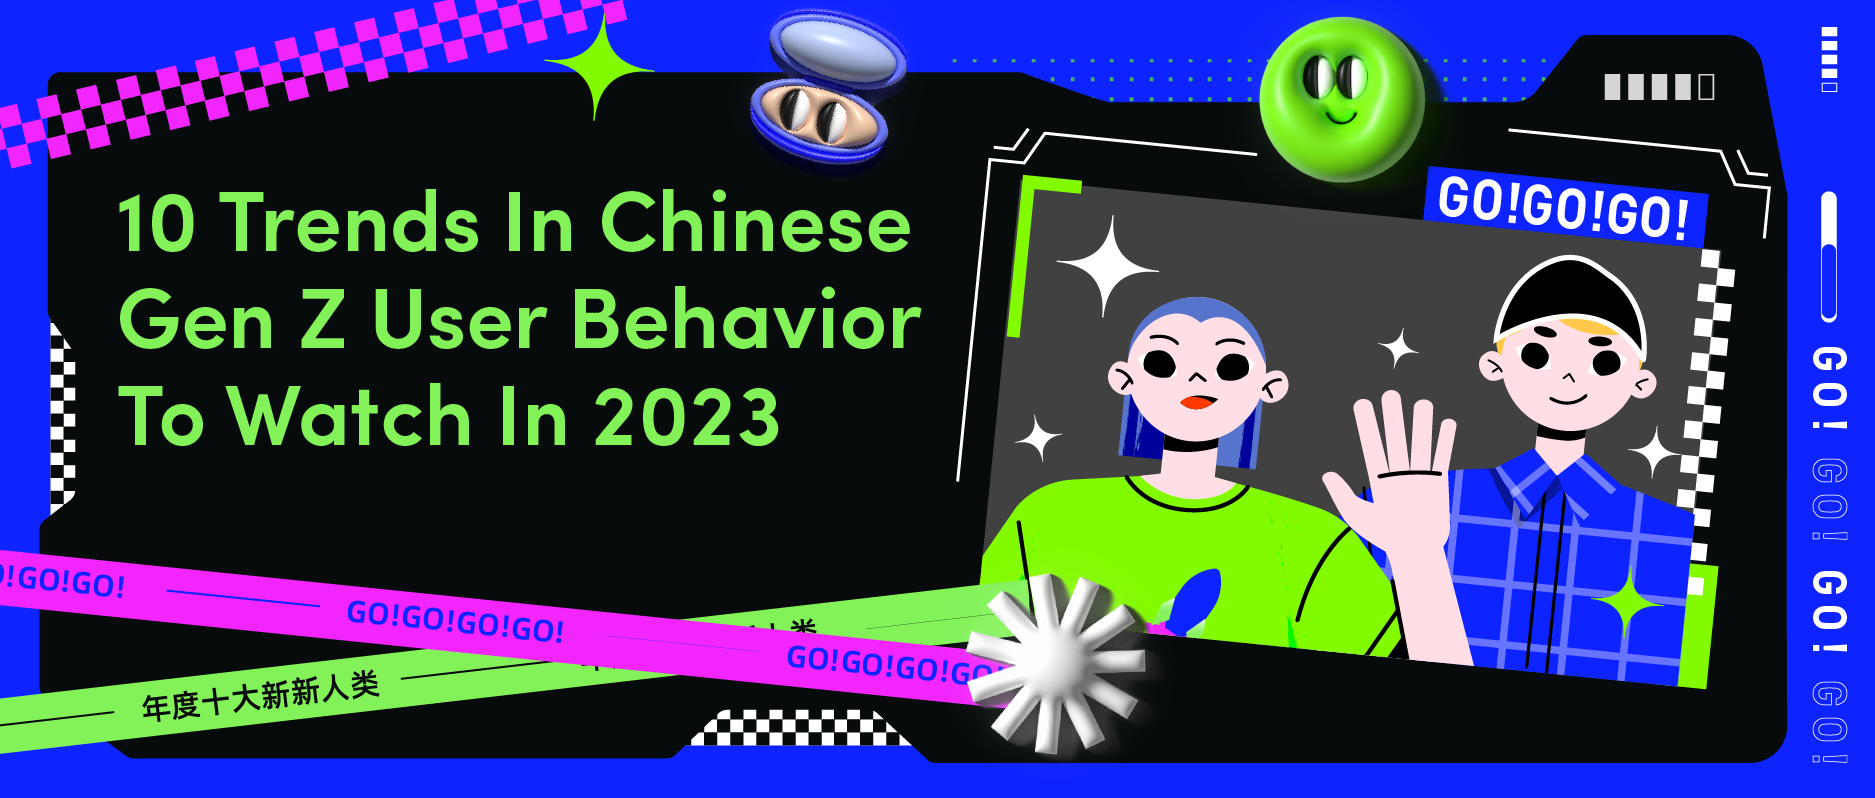 10 Trends in Chinese Gen Z User Behavior to Watch in 2023